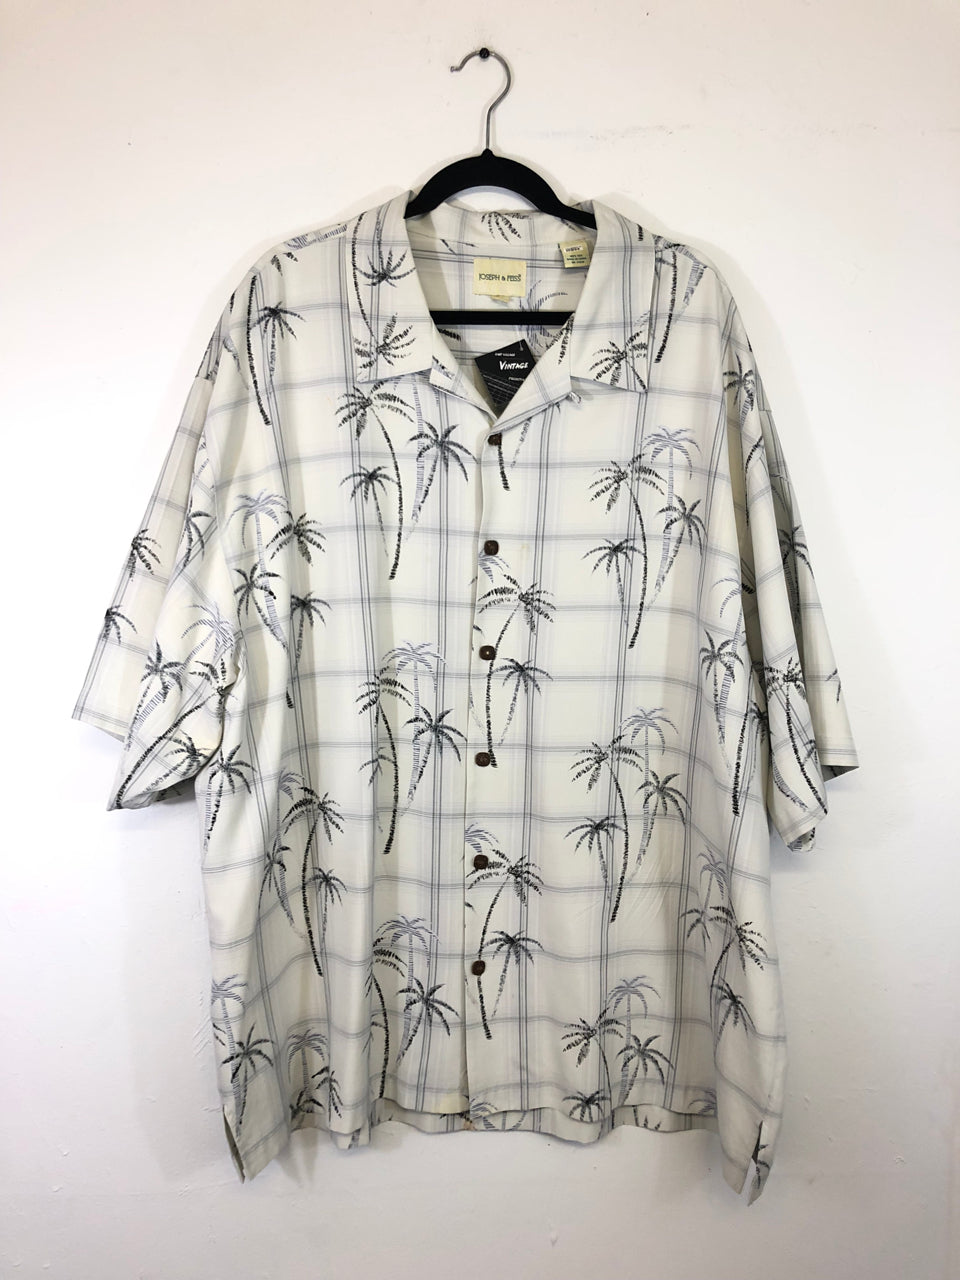 Joseph & Feiss Hawaiian Shirt